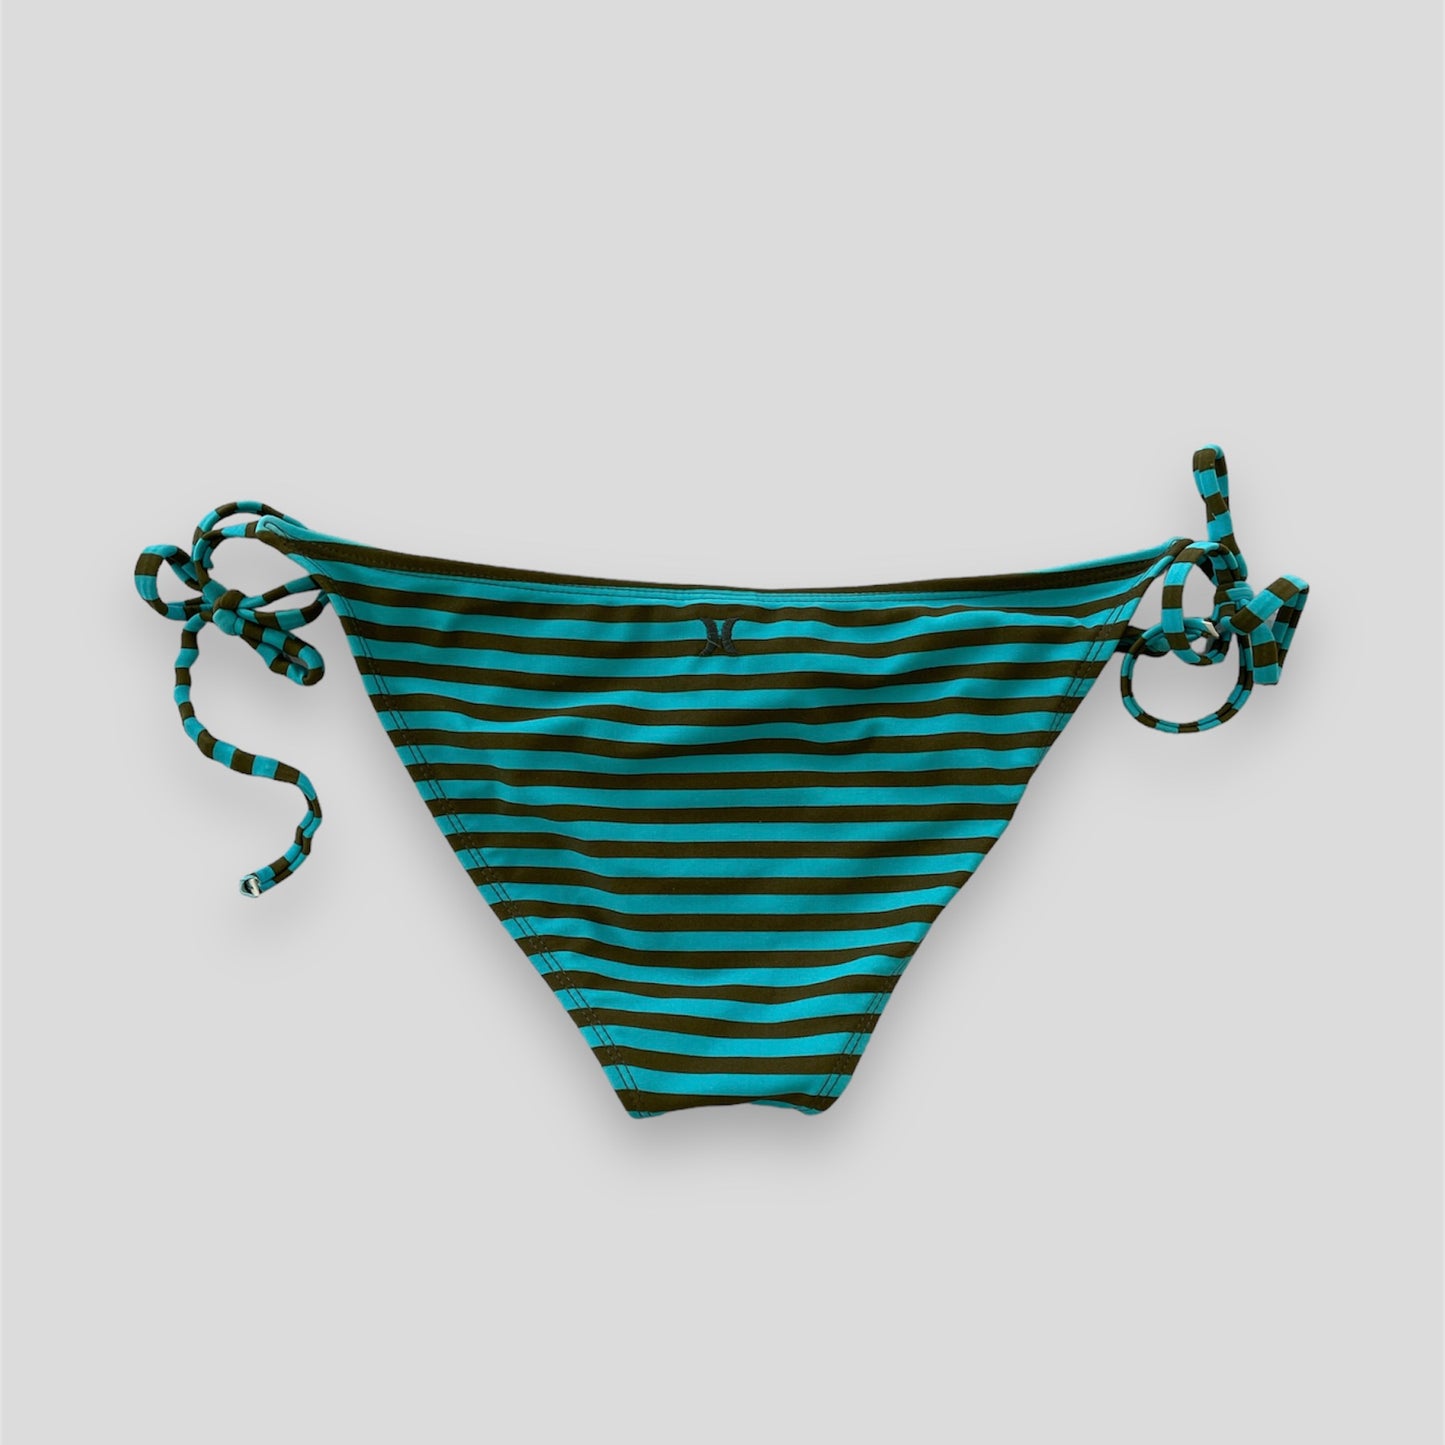 Made in USA Hurley Blue and Brown Striped String Bikini - Medium